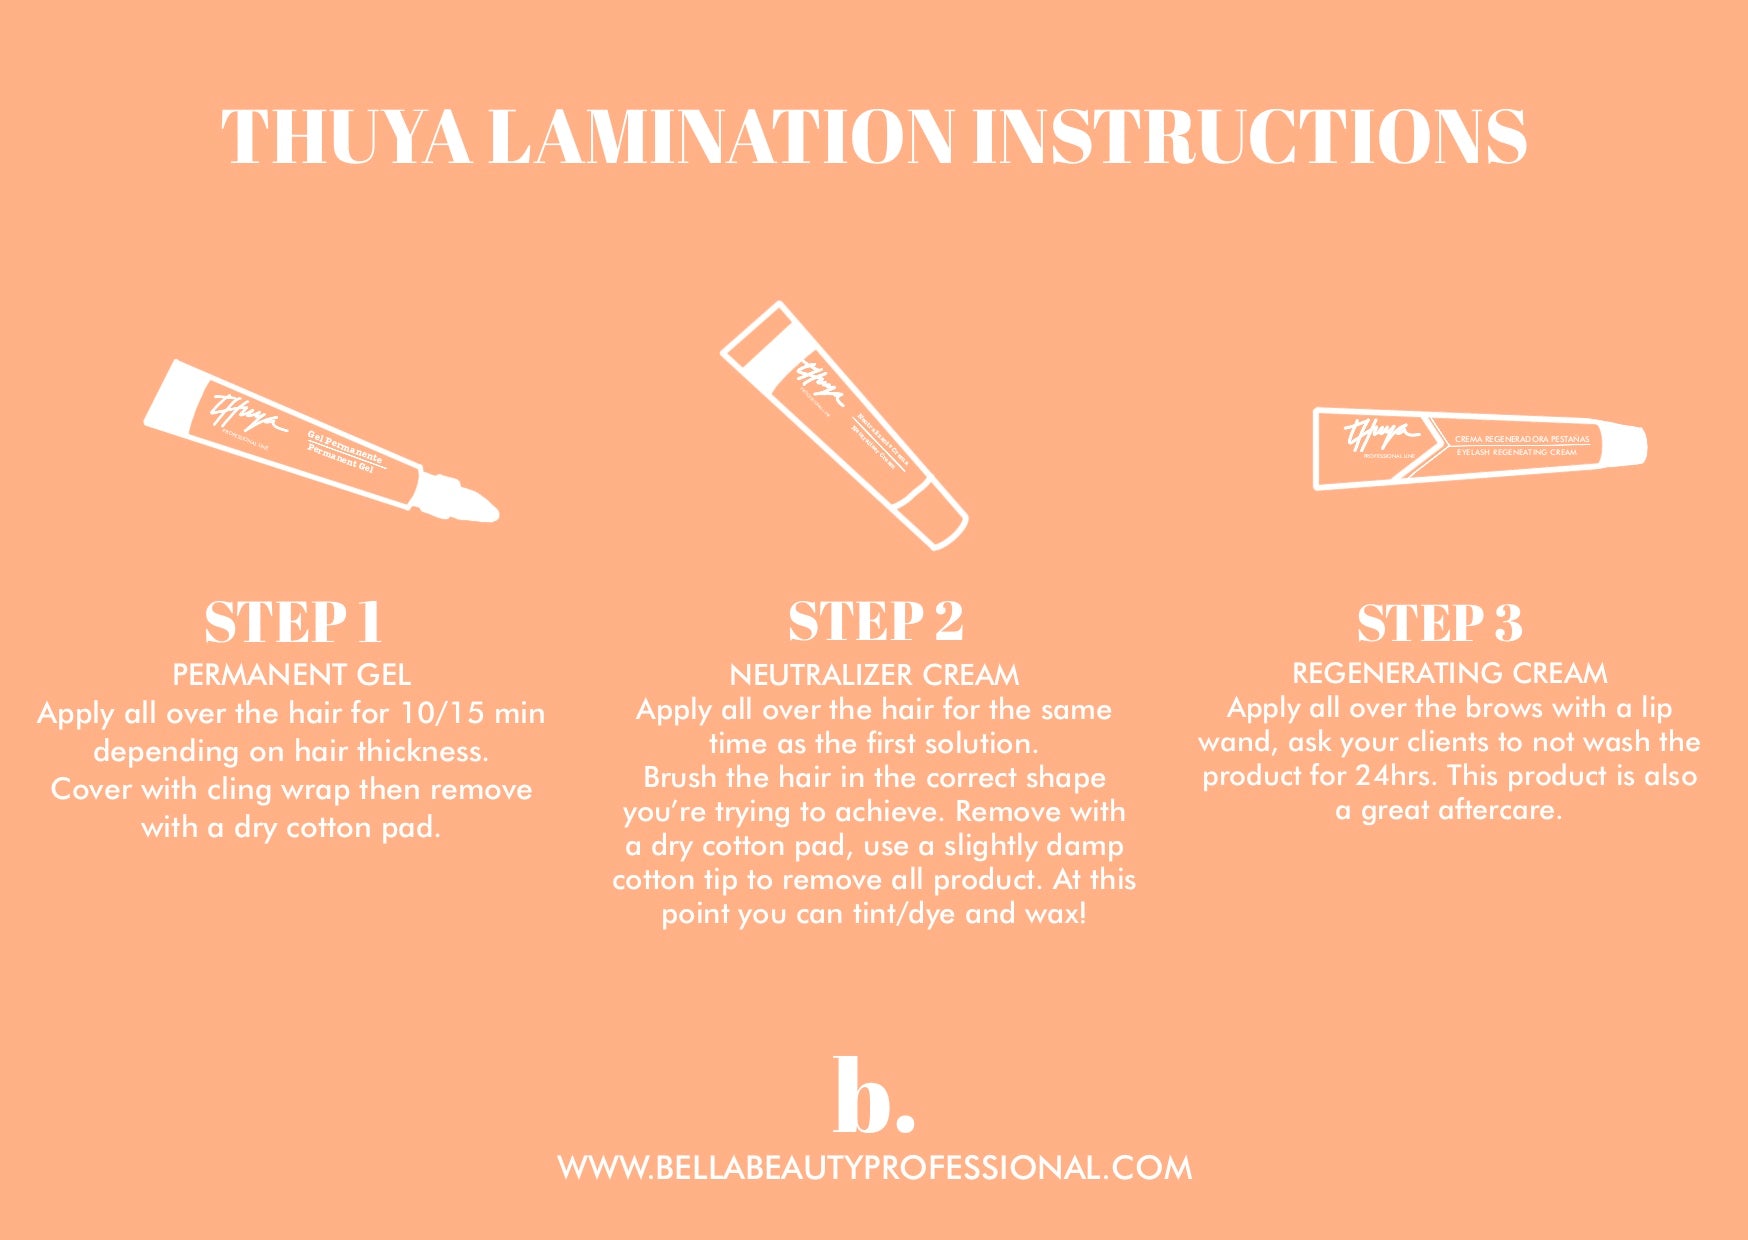 Thuya Lamination Instructions